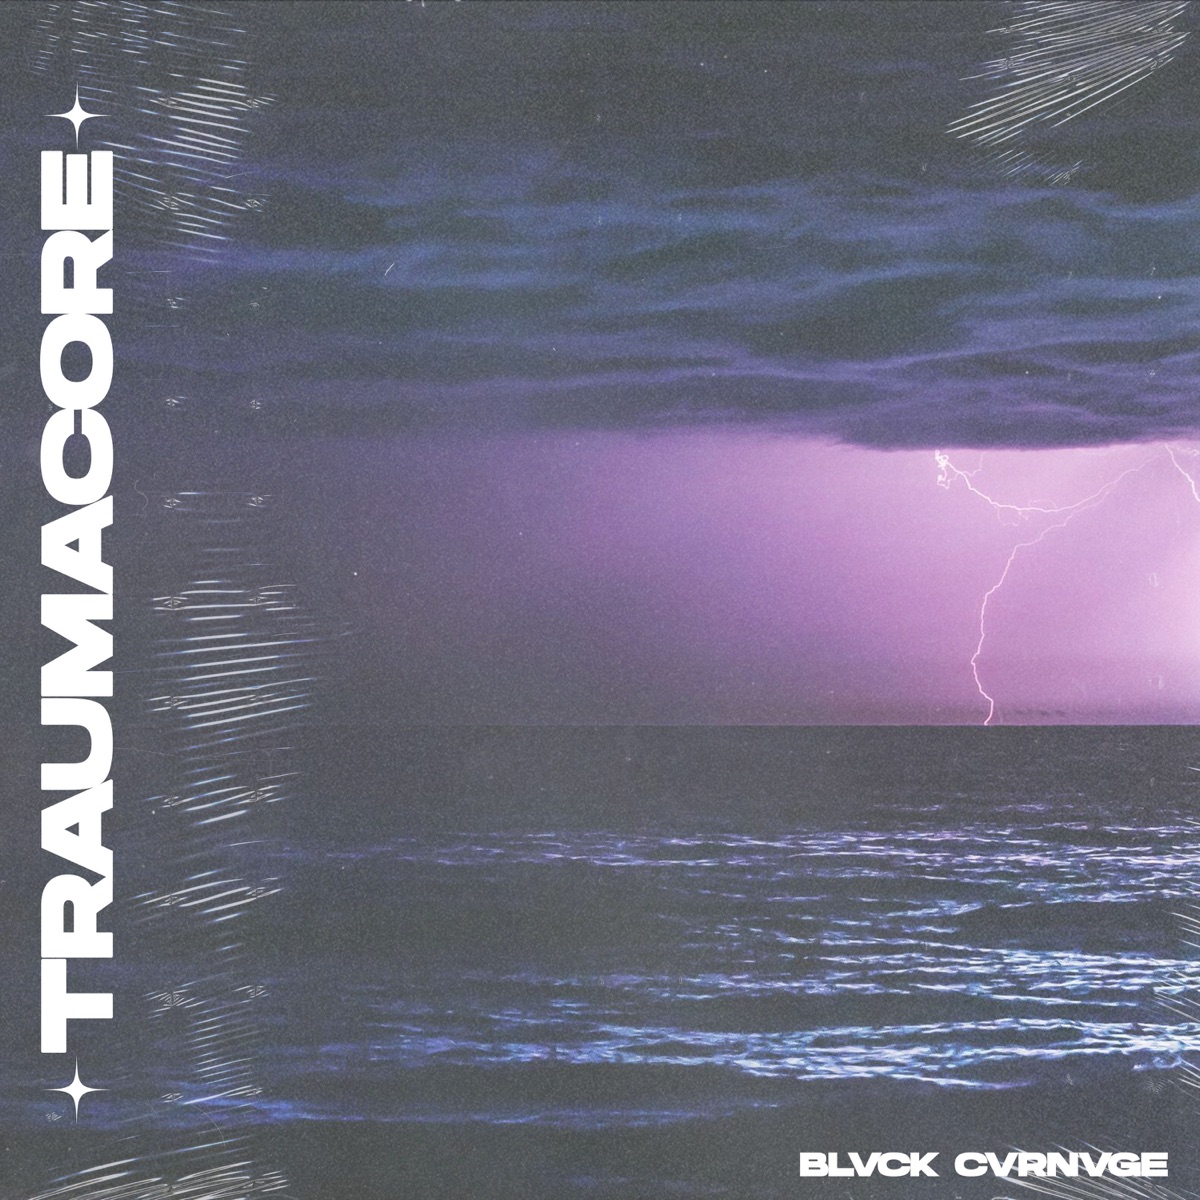 Traumacore - Single - Album by BLVCK CVRNVGE - Apple Music